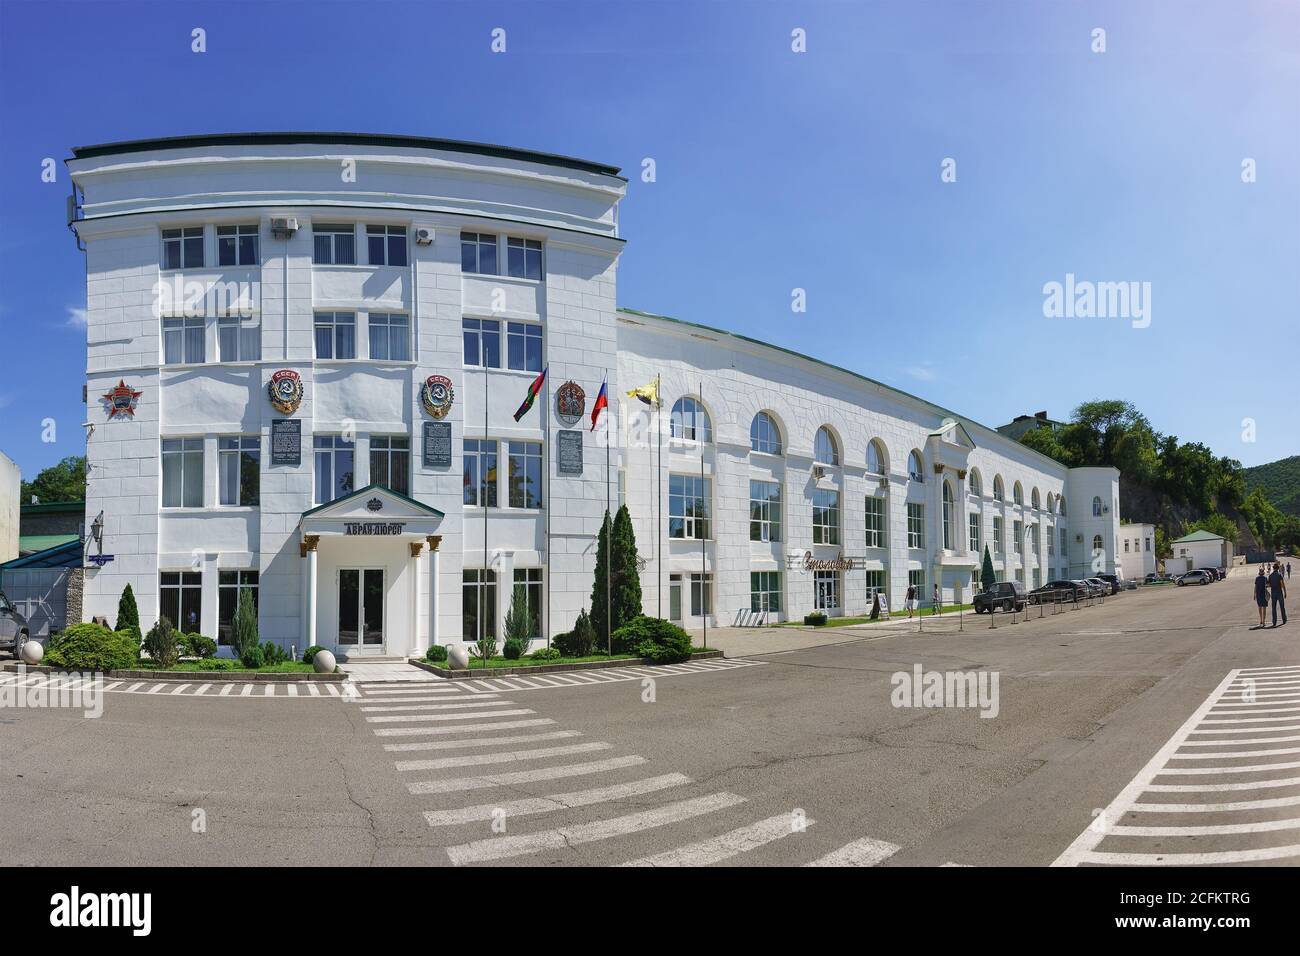 Russia, Krasnodar region, Novorossiysk, Abrau-Durso village-June 12, 2018: Administrative building of JSC Abrau-Durso. The facade of the building is d Stock Photo